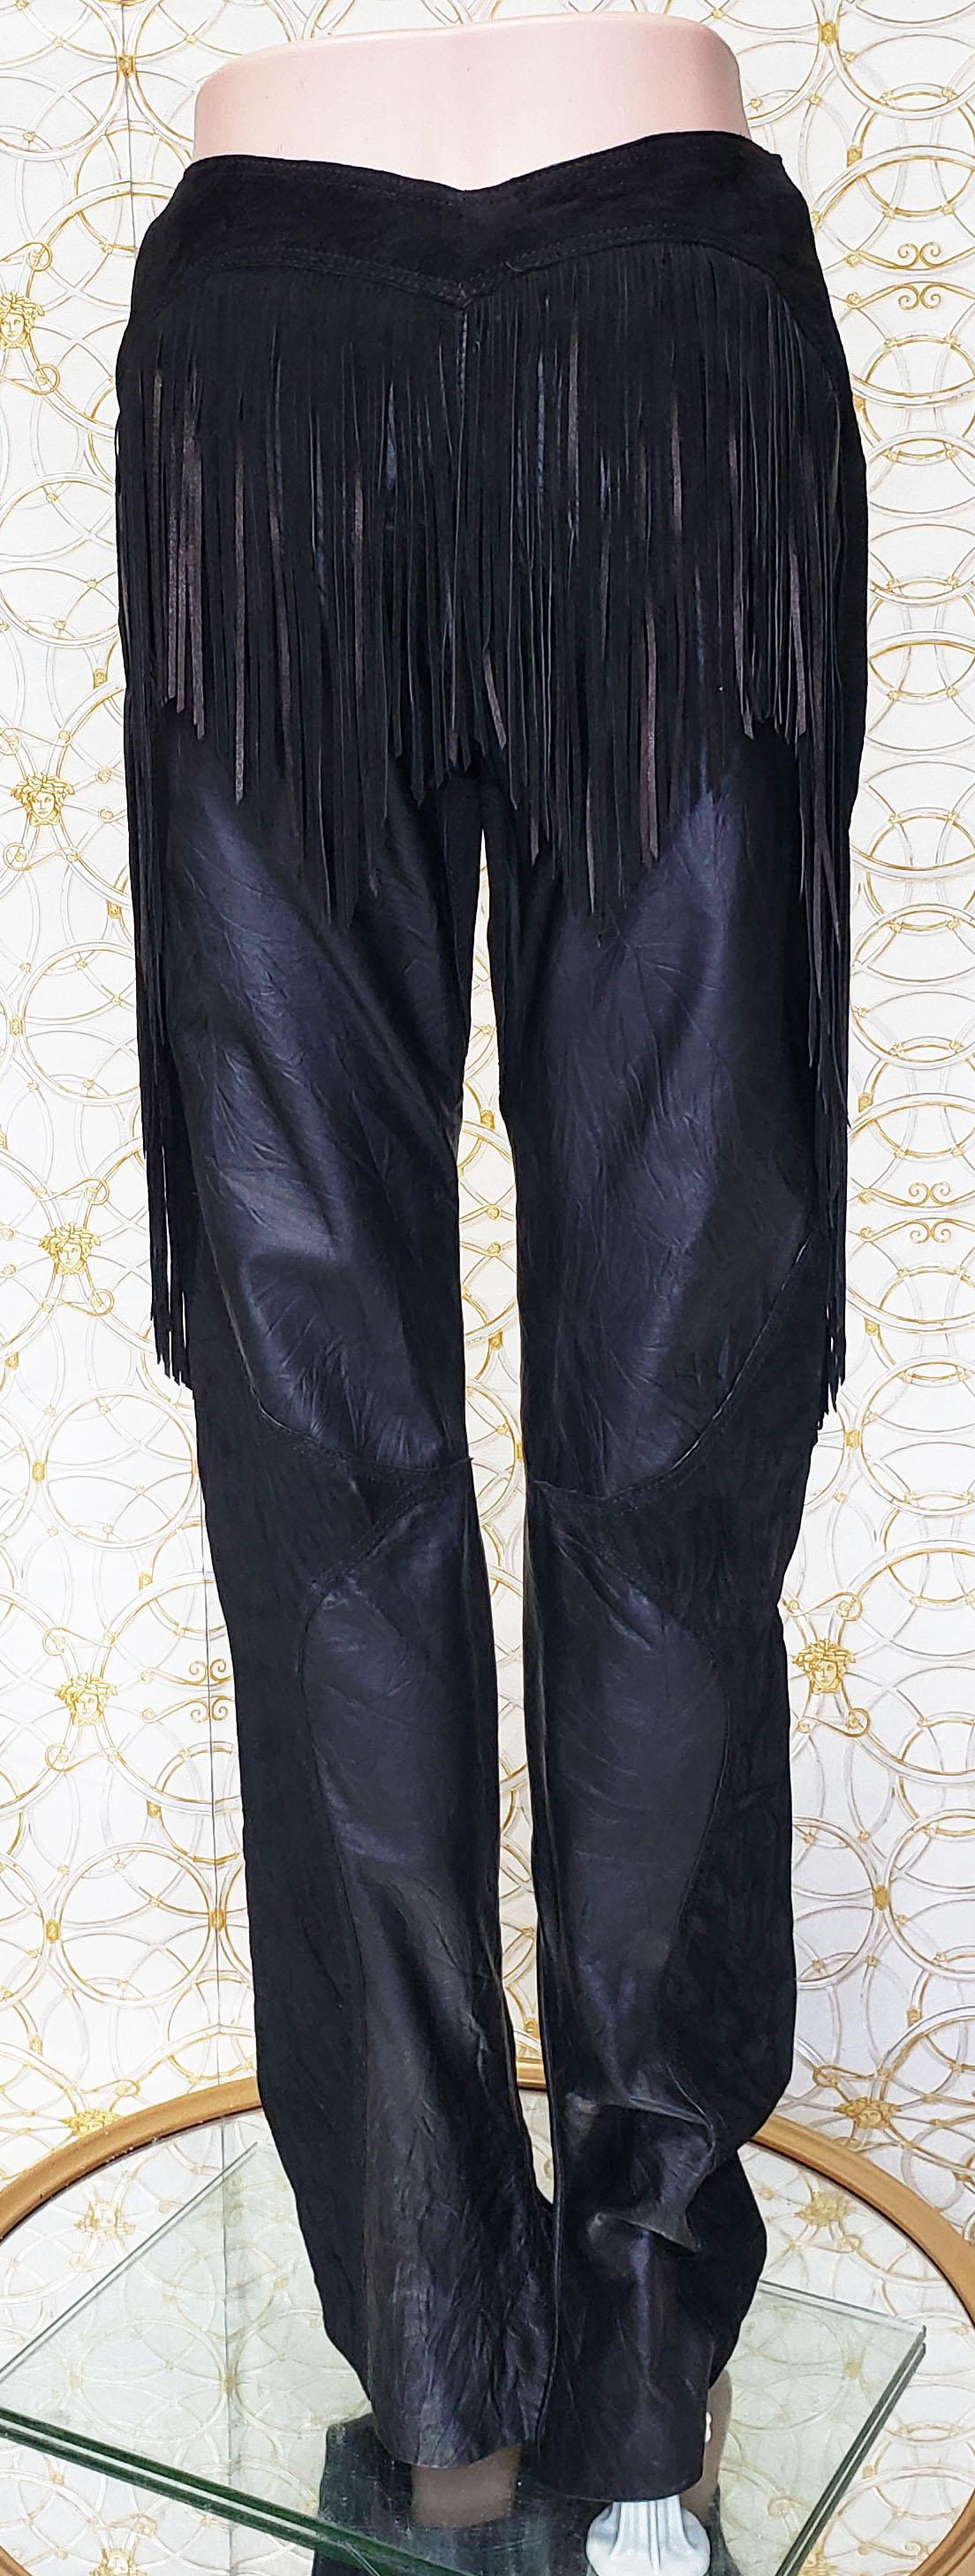 black leather fringe pants